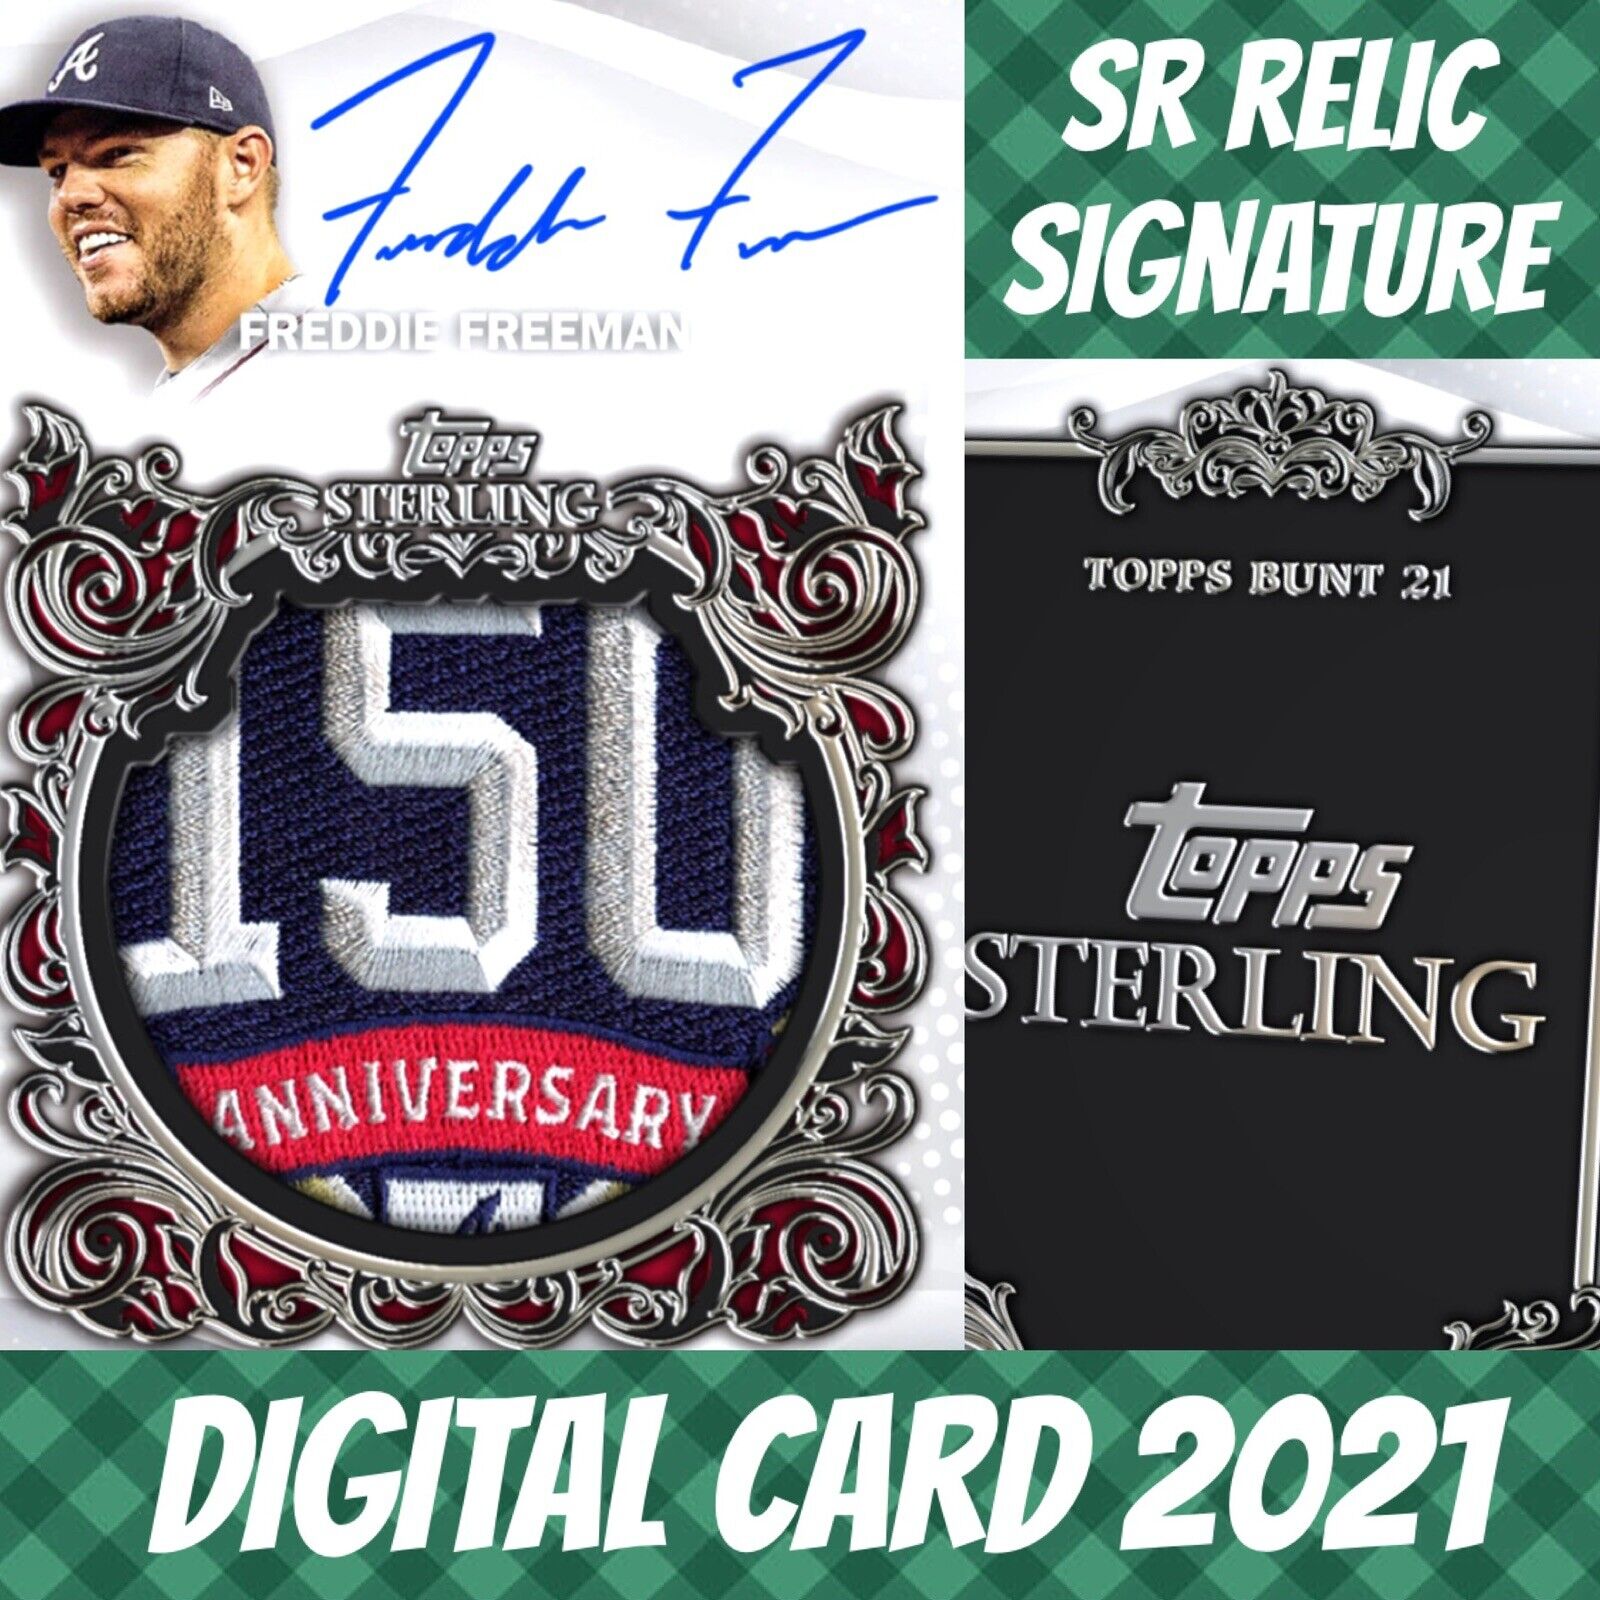 Topps Colorful 21 Freddie Freeman Sterling Splendor SR Relic Signature 2021 Digital